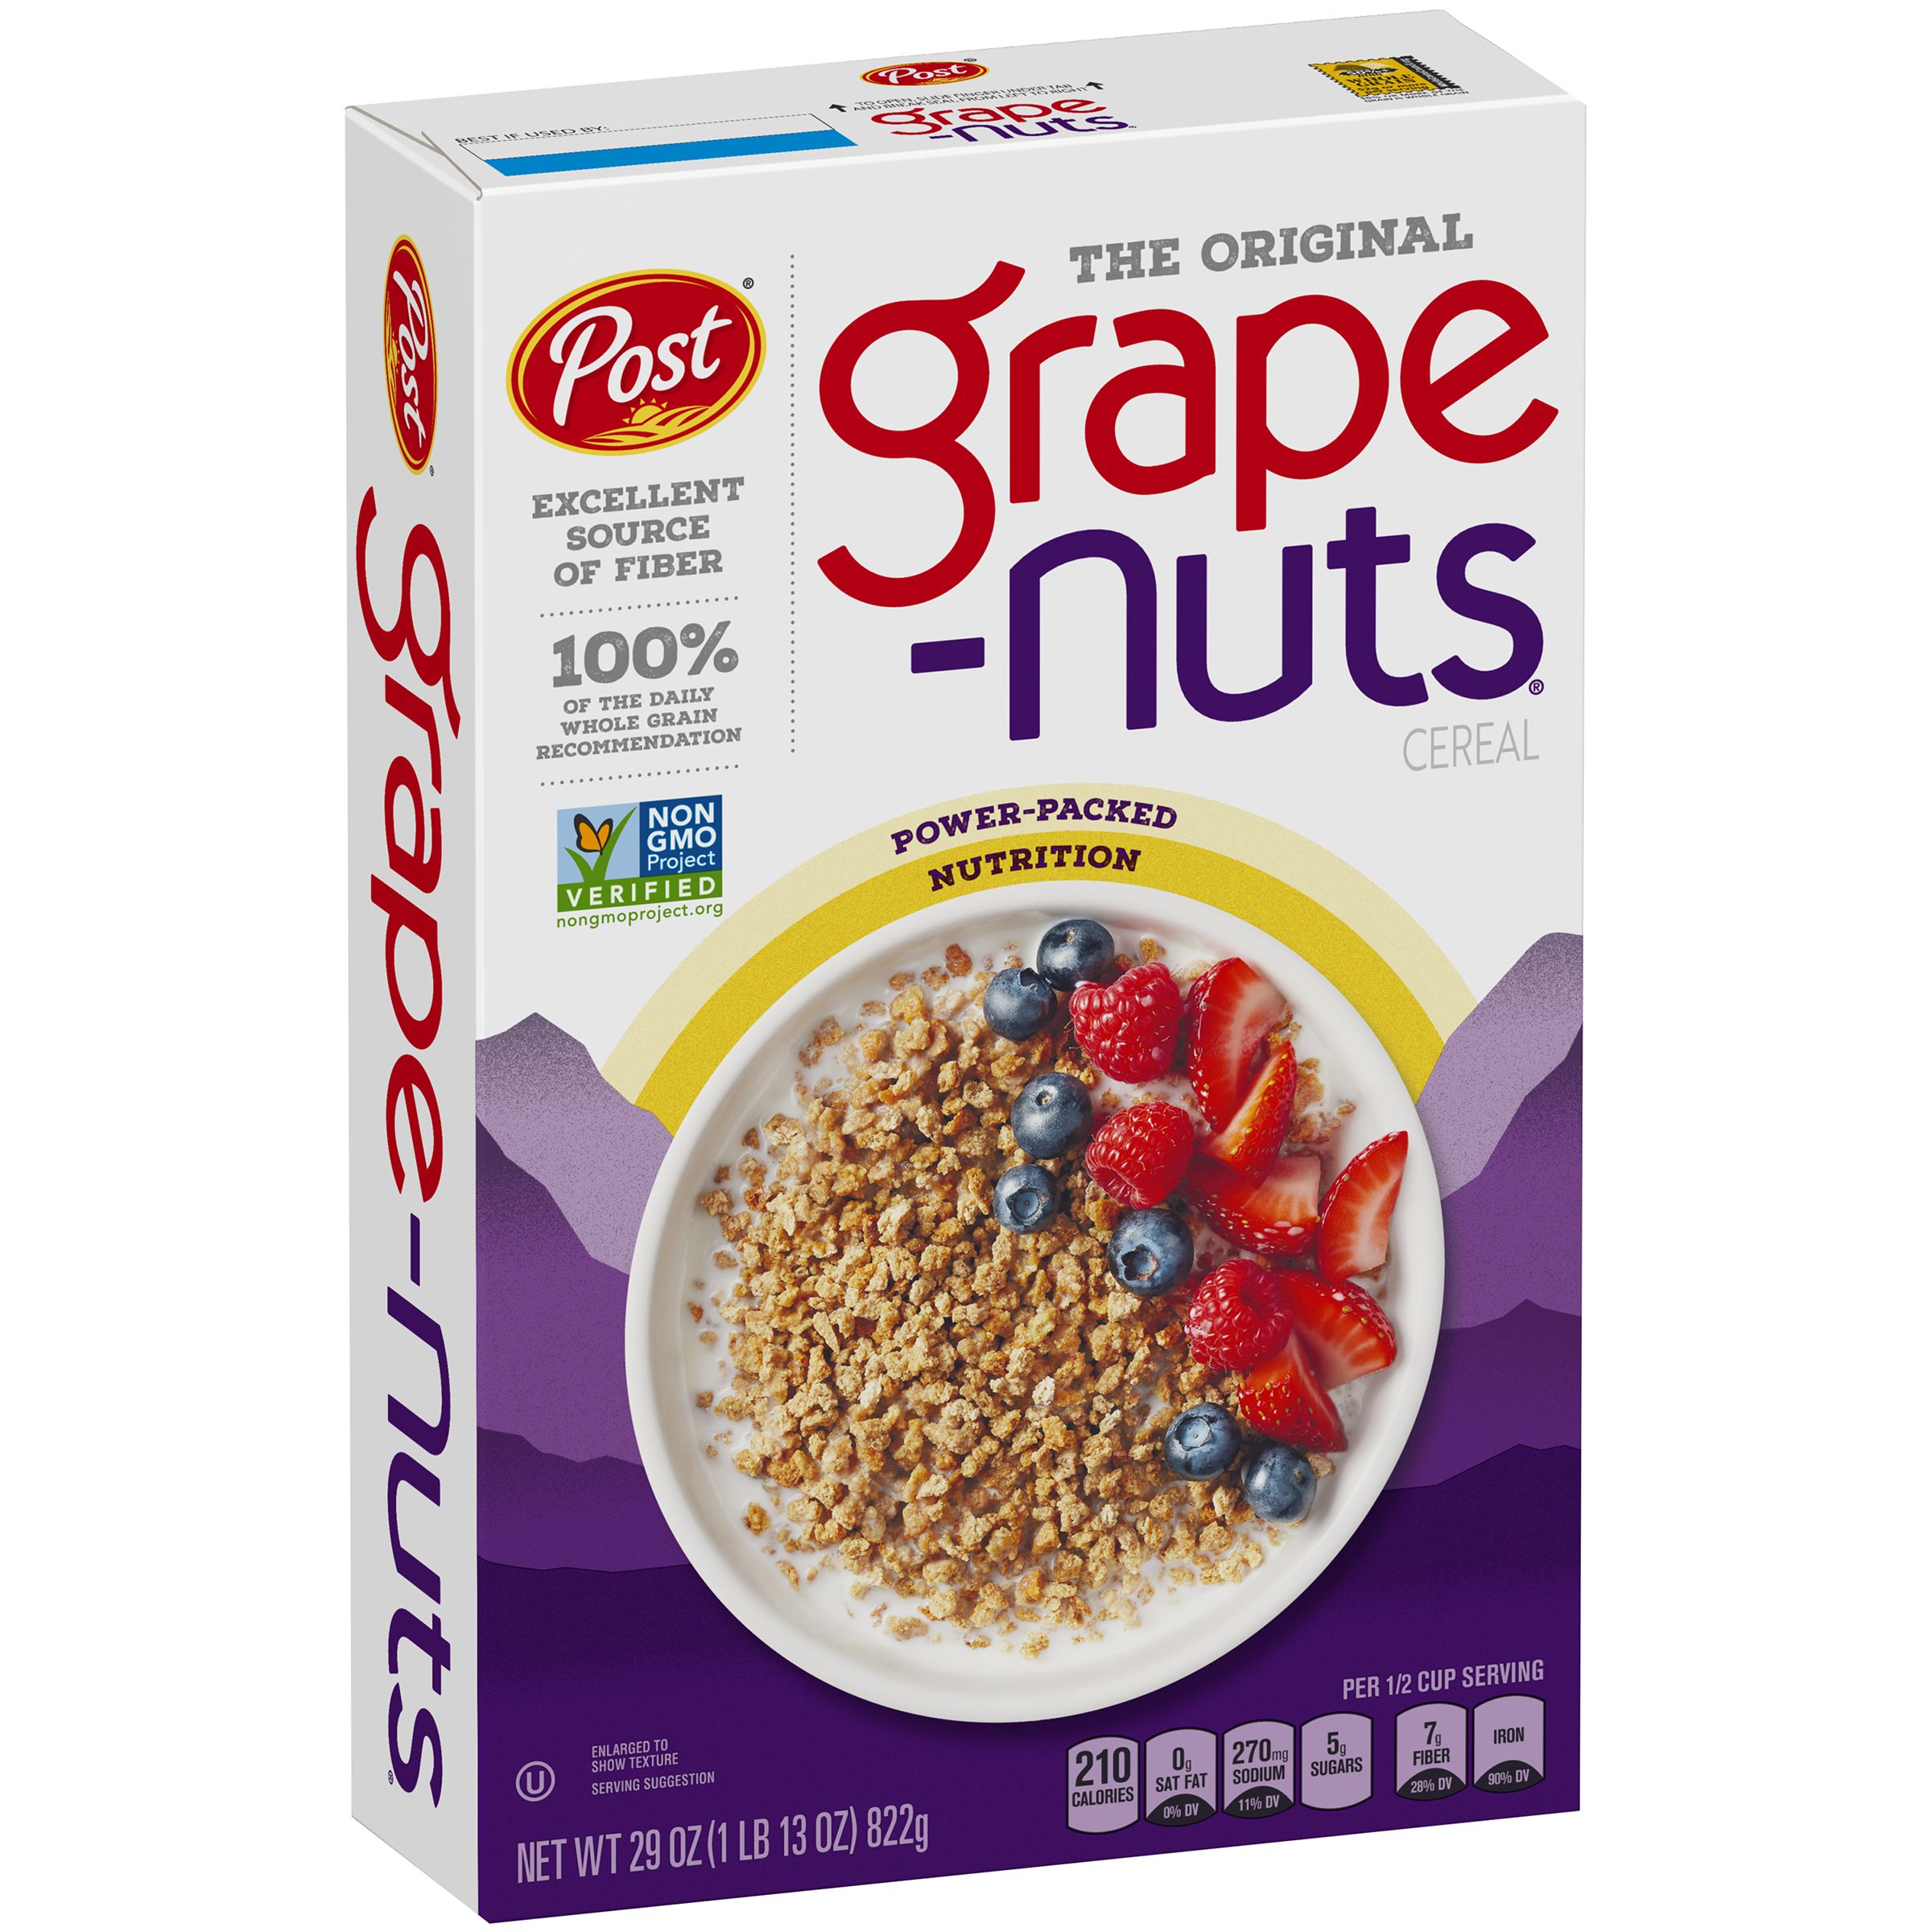 Grape-Nuts